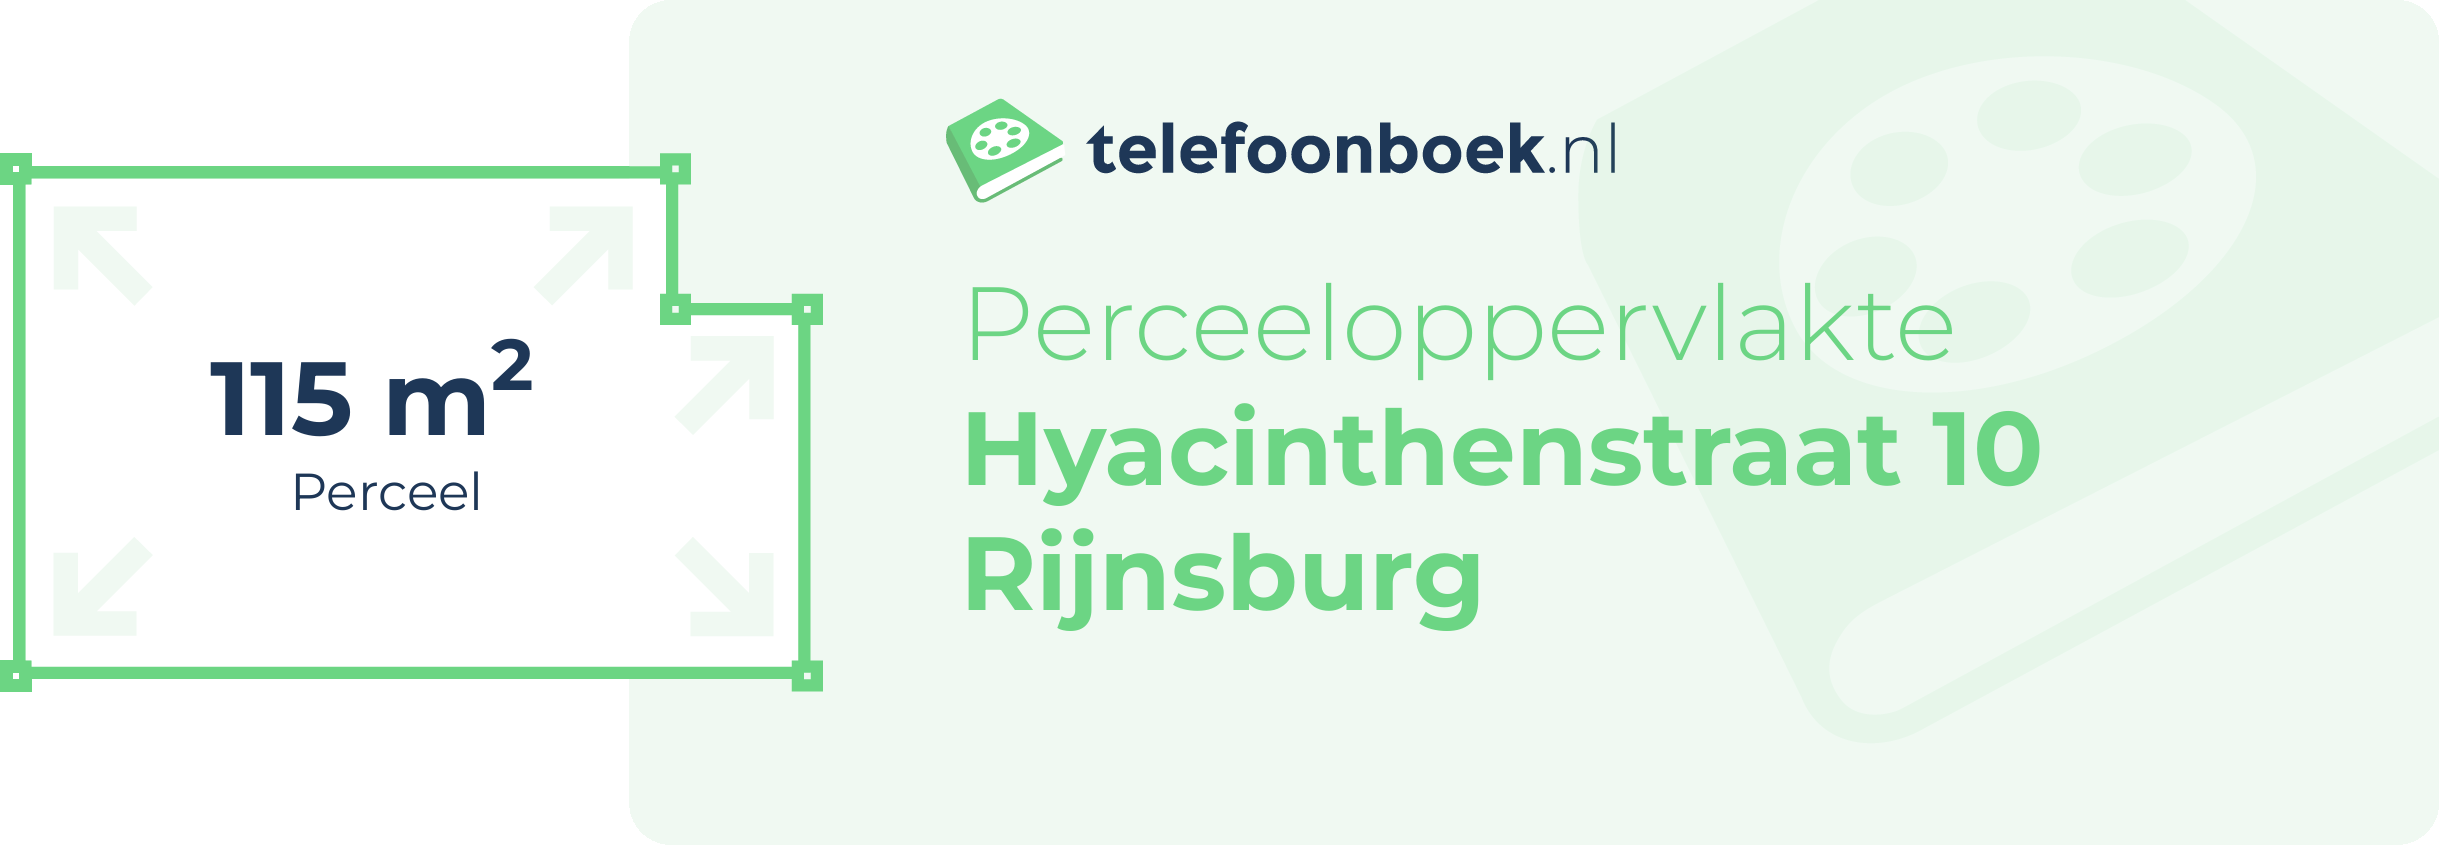 Perceeloppervlakte Hyacinthenstraat 10 Rijnsburg